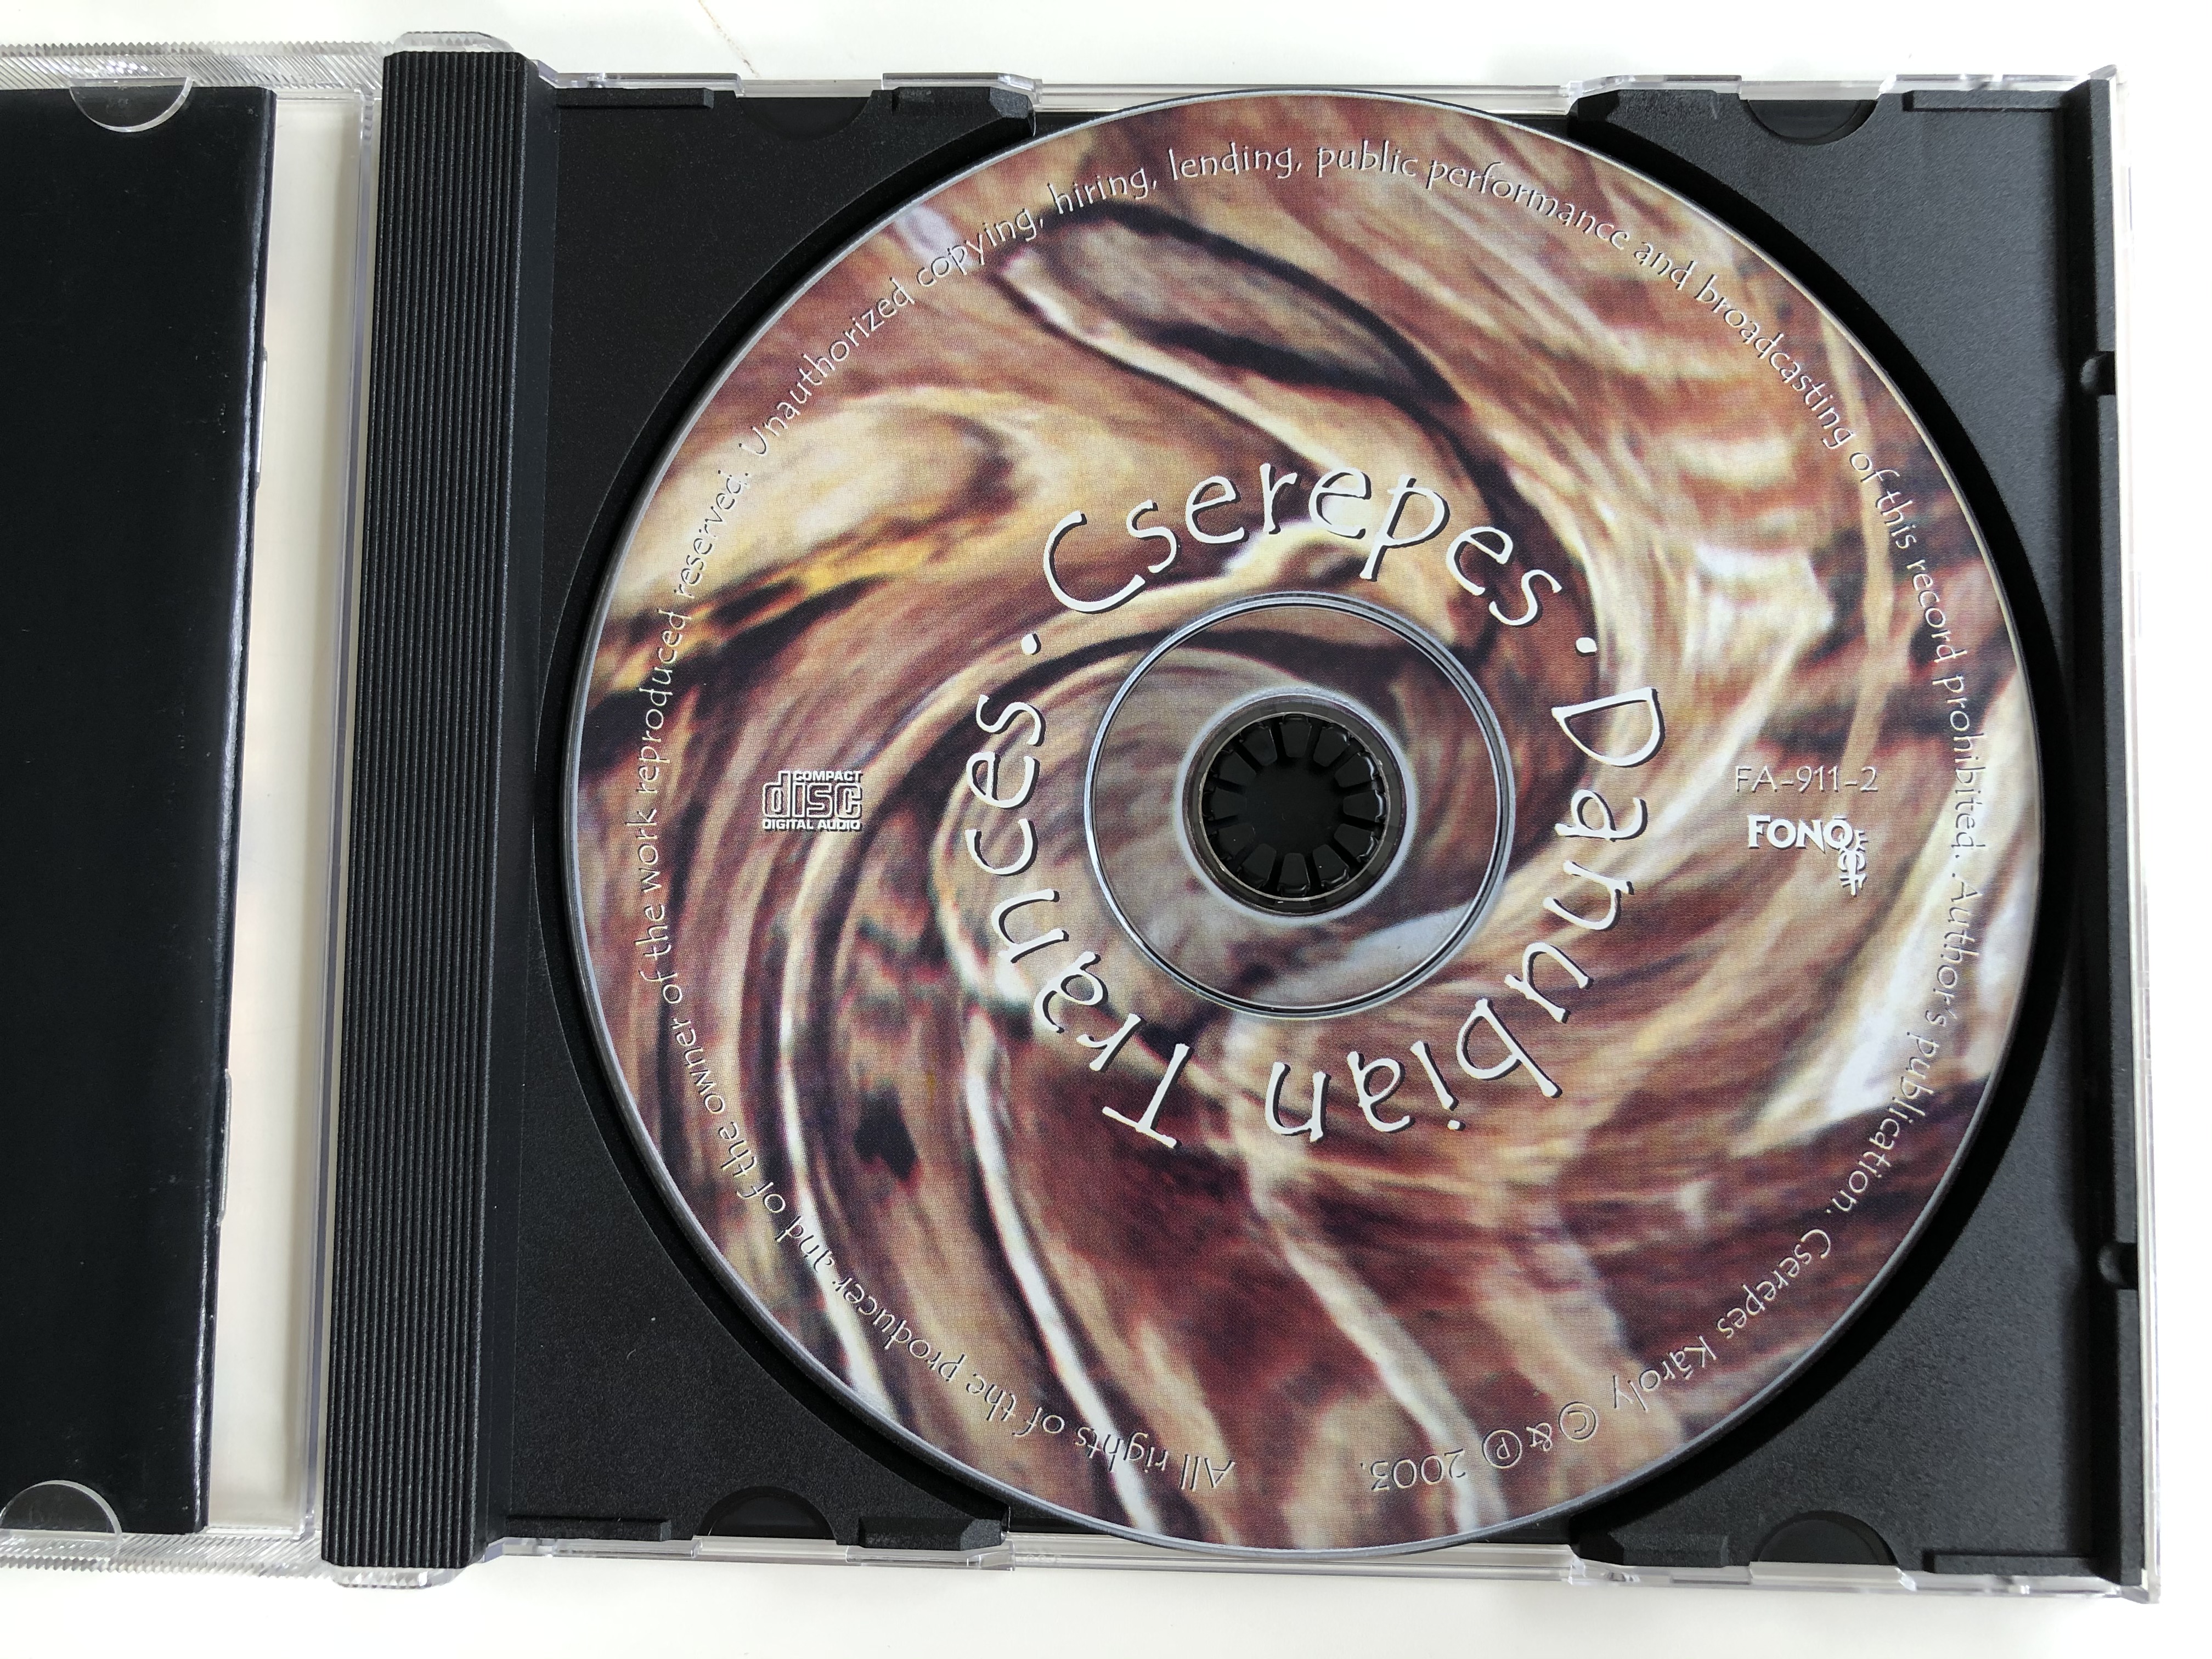 cserepes-k-roly-danubian-trances-mikroworld-ambient-fon-records-audio-cd-2003-fa-911-2-7-.jpg